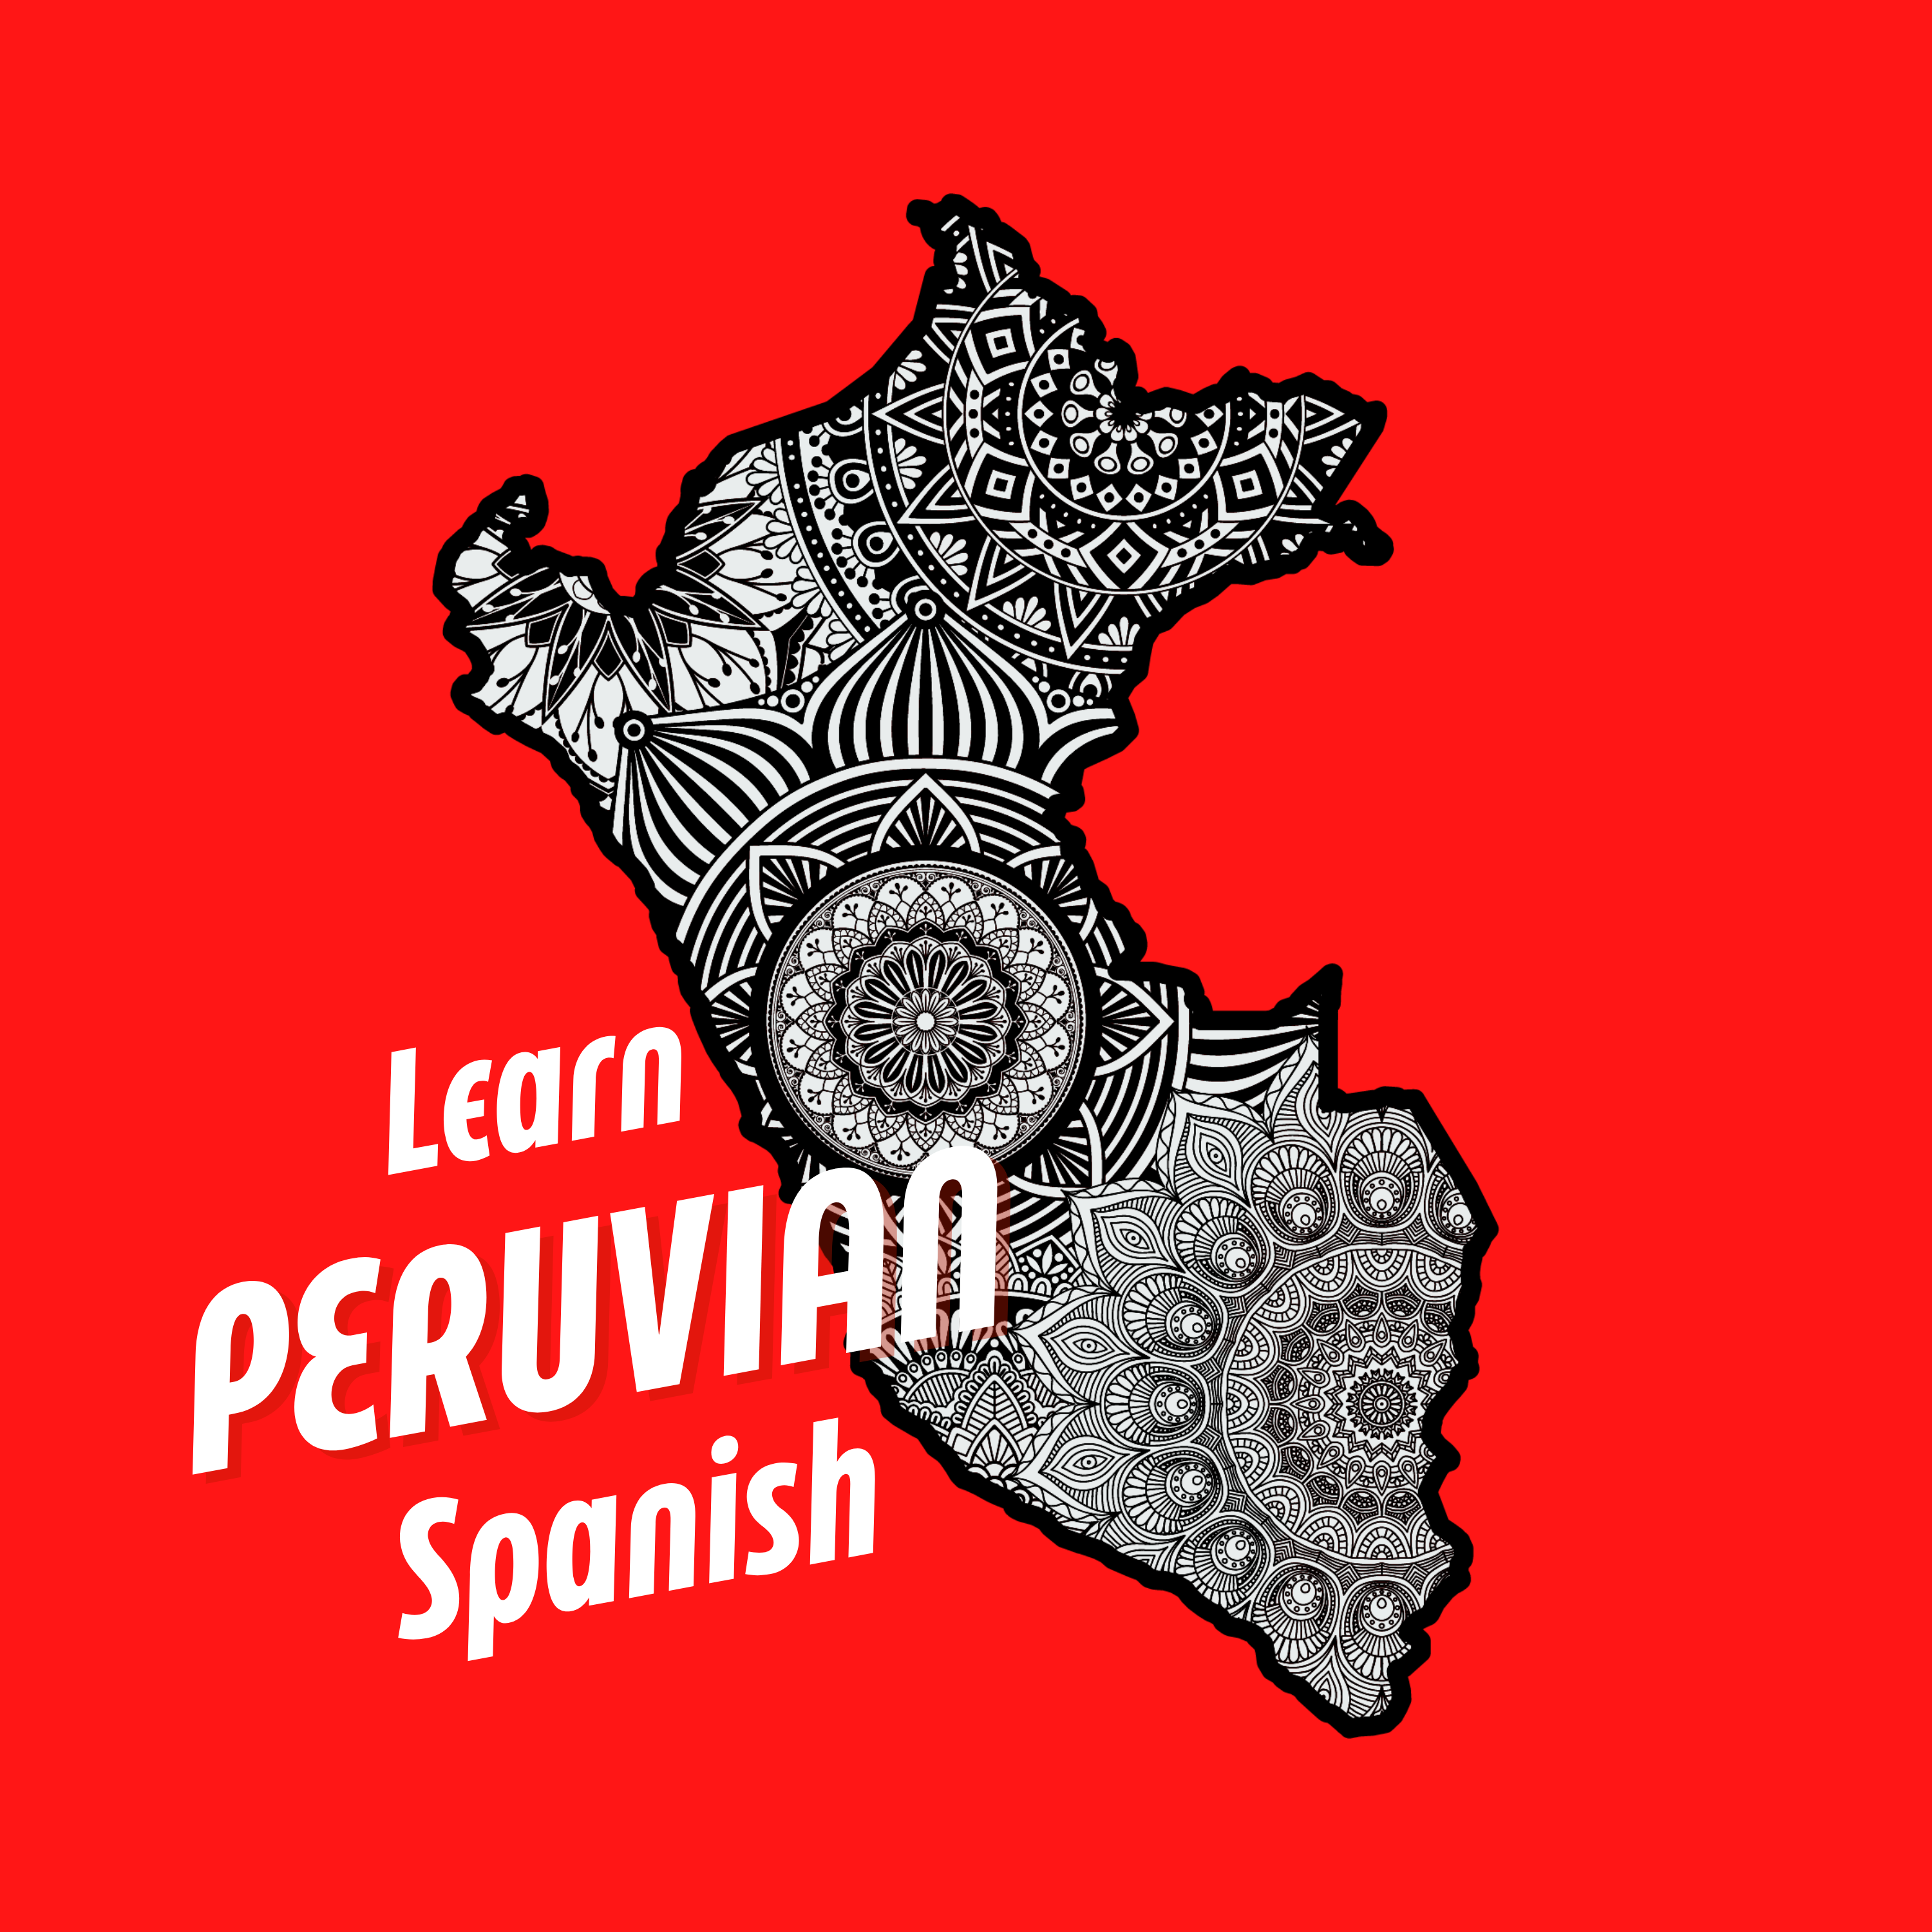 Learn Peruvian Spanish